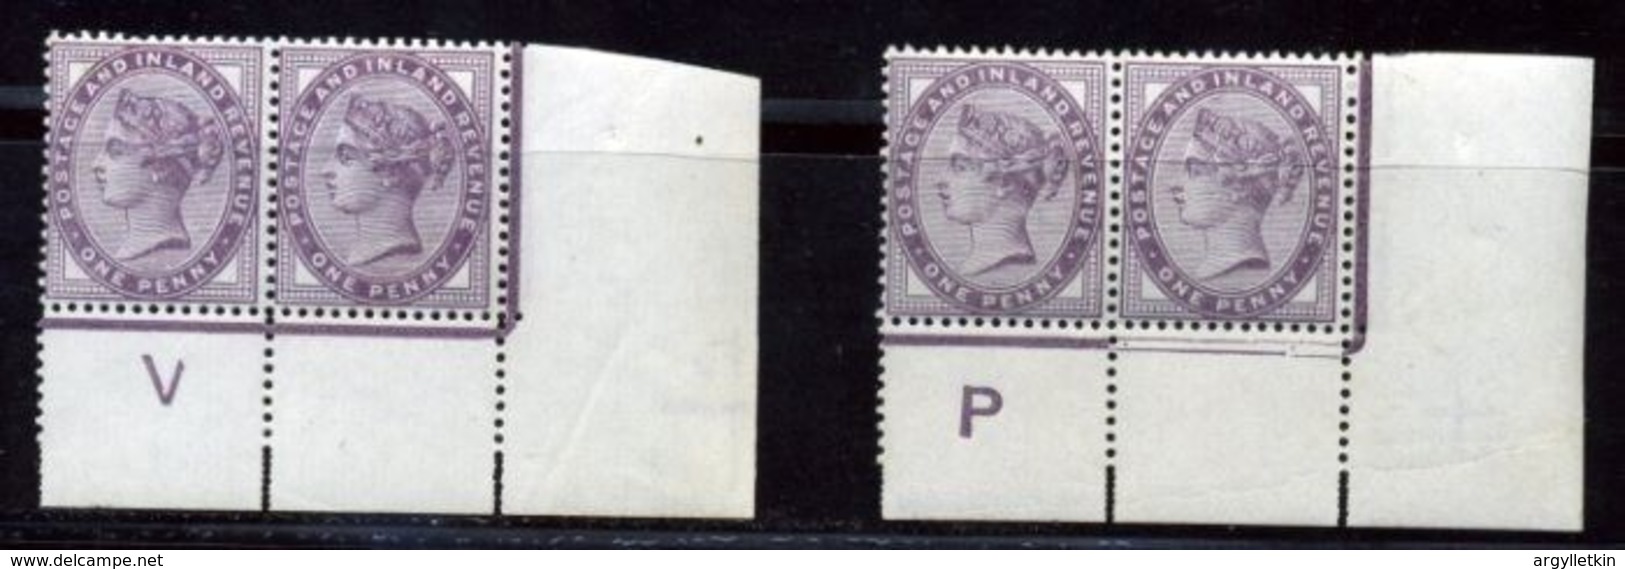 GREAT BRITAIN 1d LILAC VARIETIES MNH! - Unused Stamps